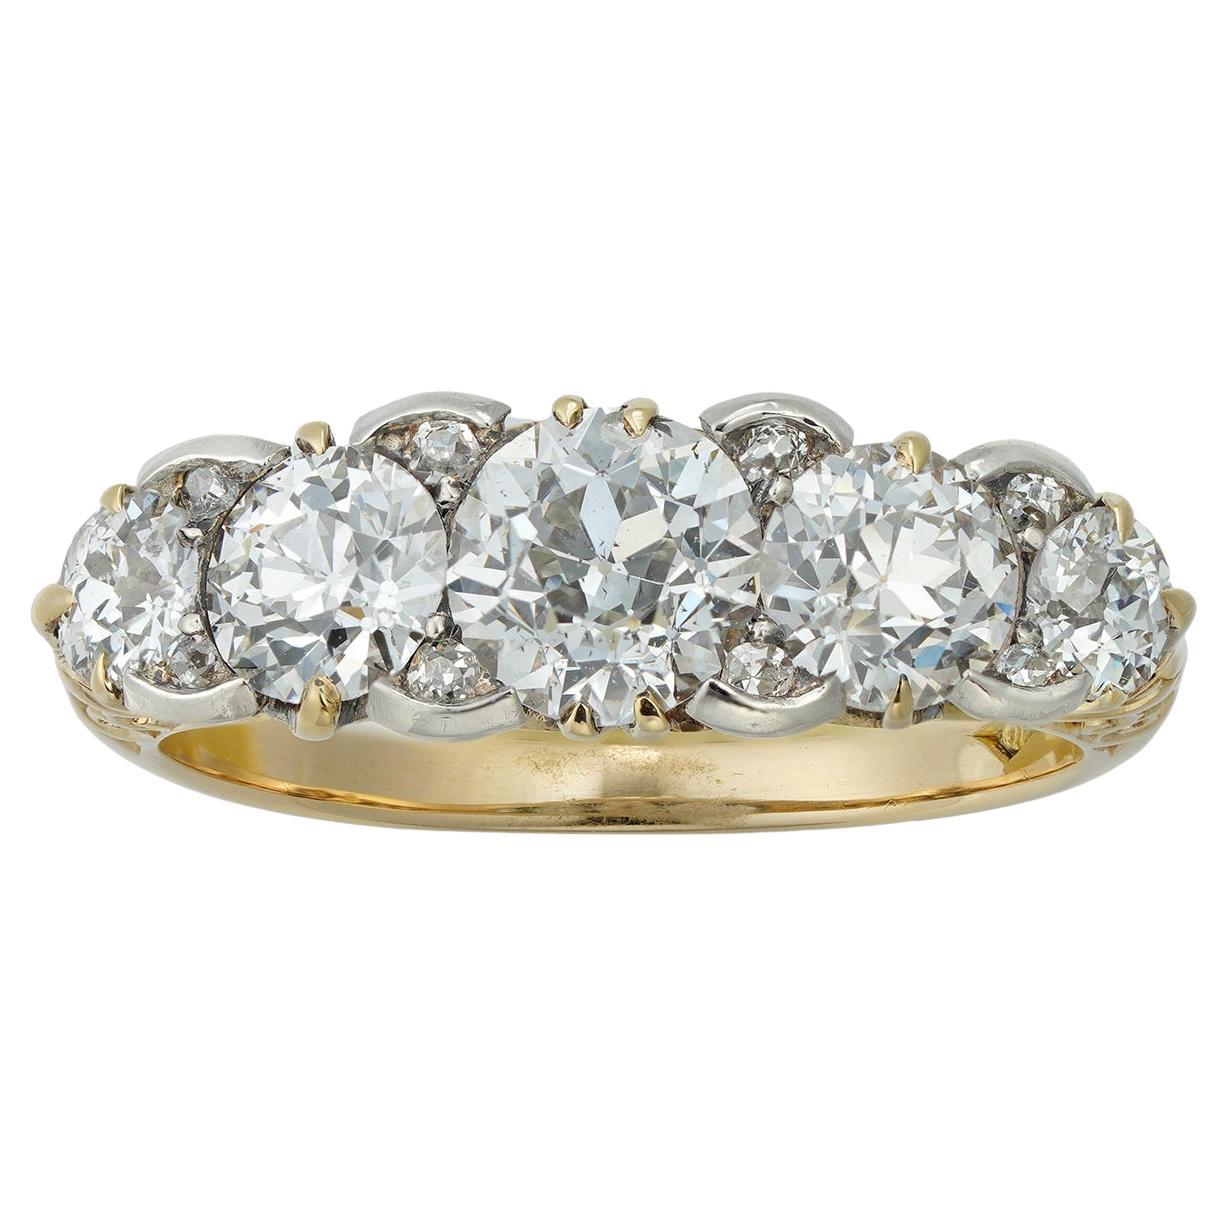 A Late Victorian Five Stone Diamond Ring